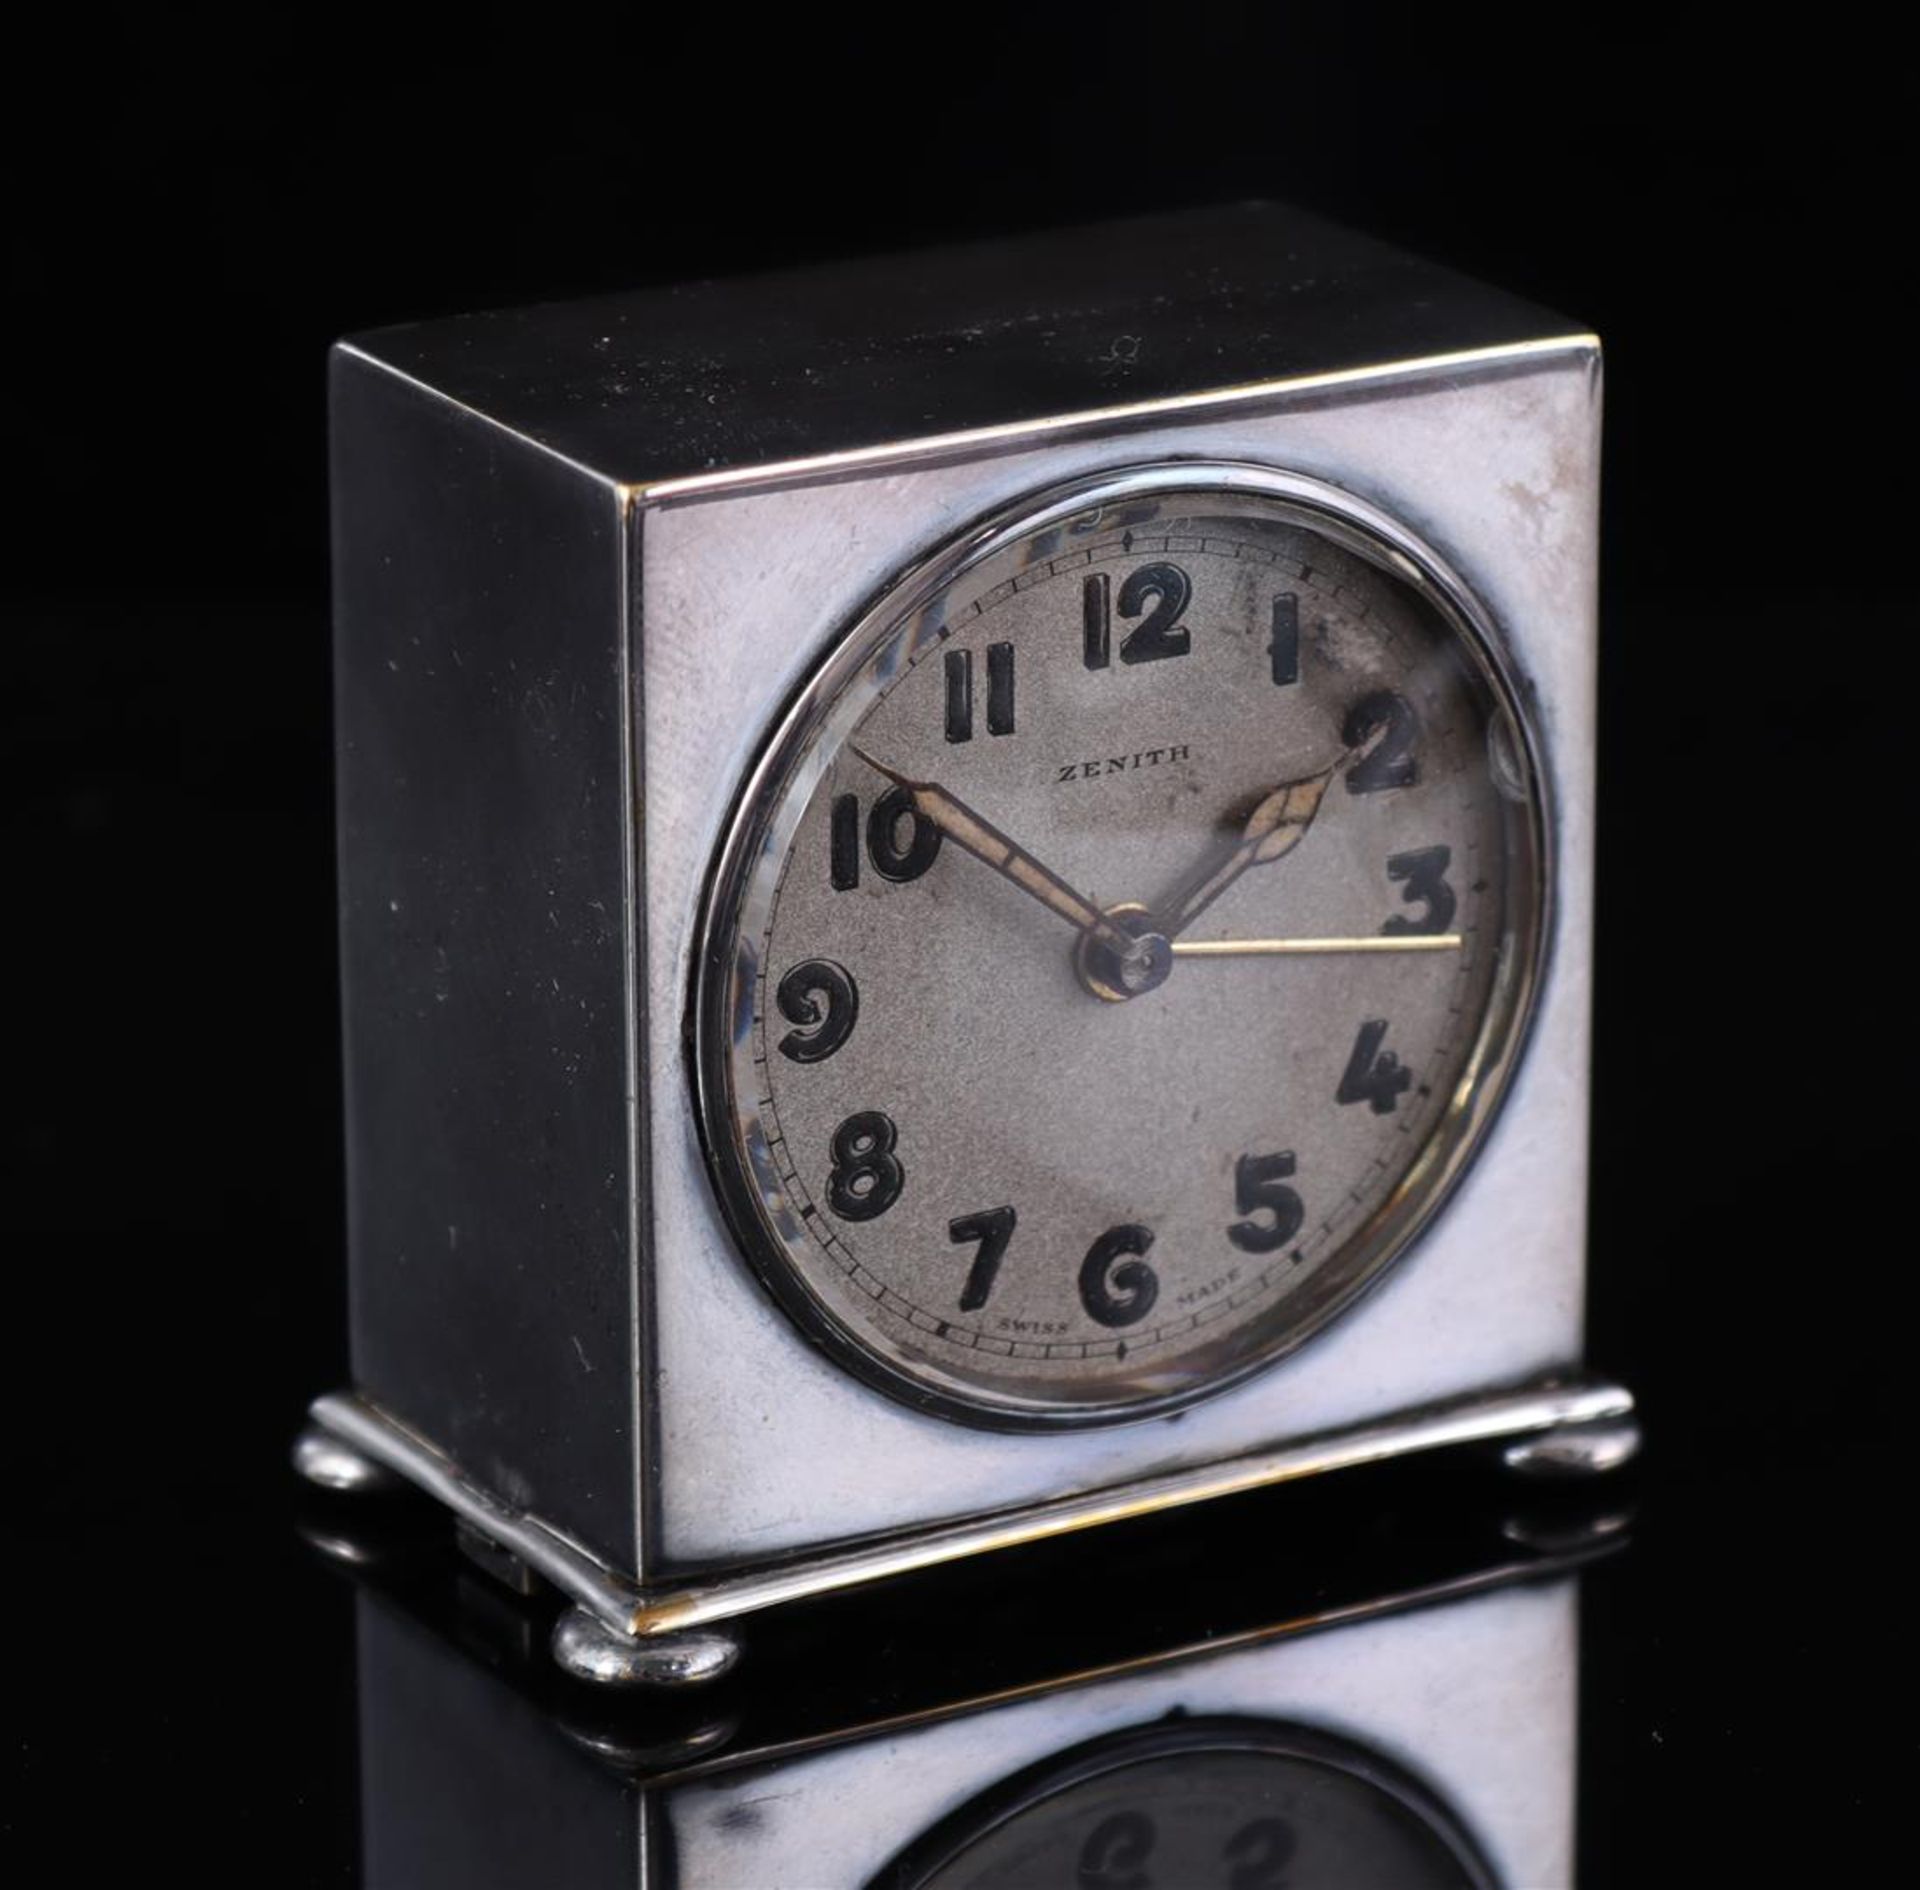 Zenith Watch & Co Swiss travel alarm clock - Image 2 of 2